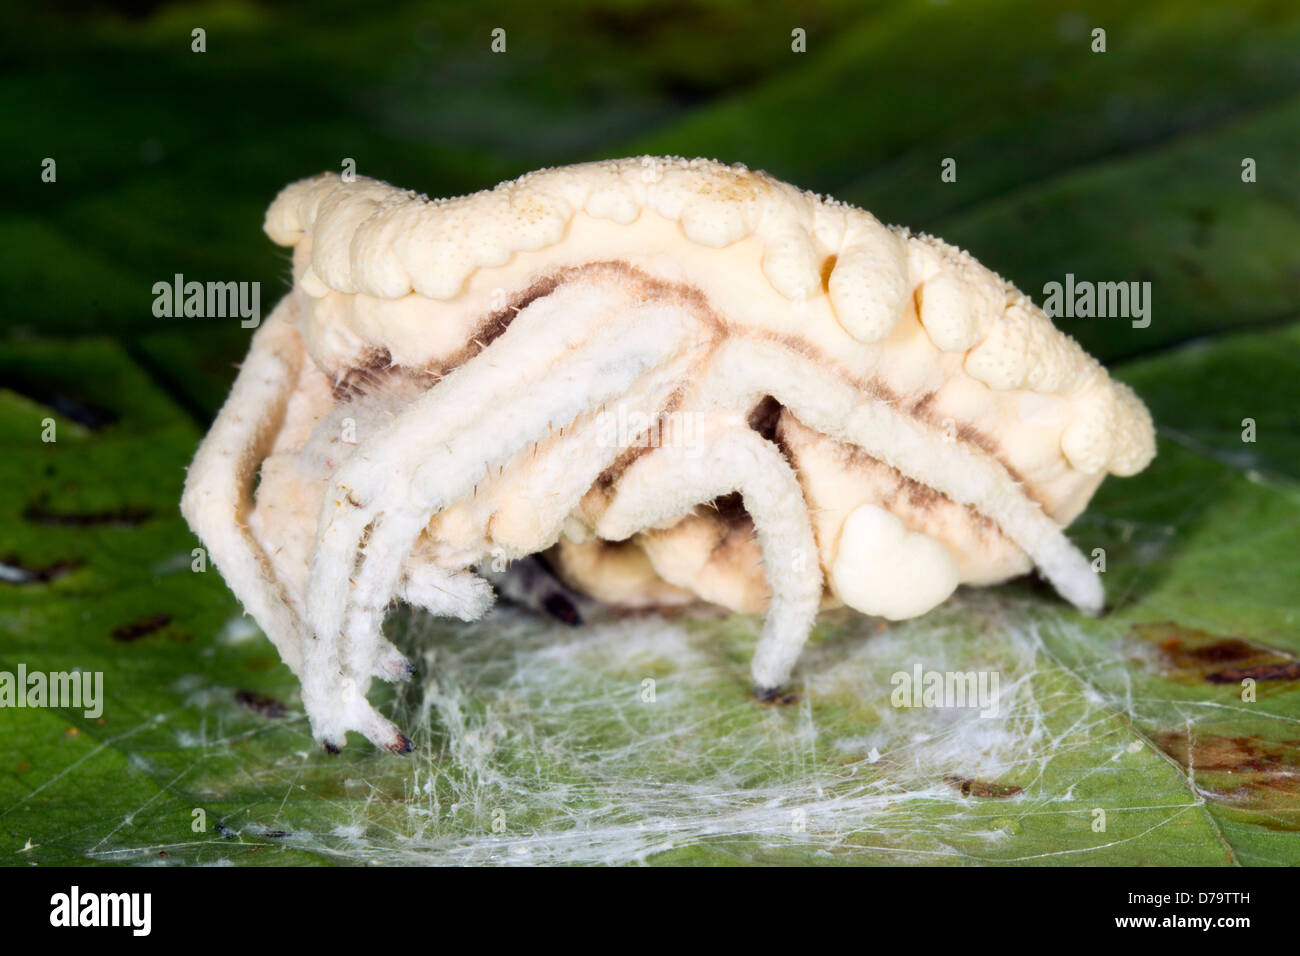 Cordyceps fungus (Torrubiella sp.) infecting a spider in the rainforest understory, Ecuador Stock Photo